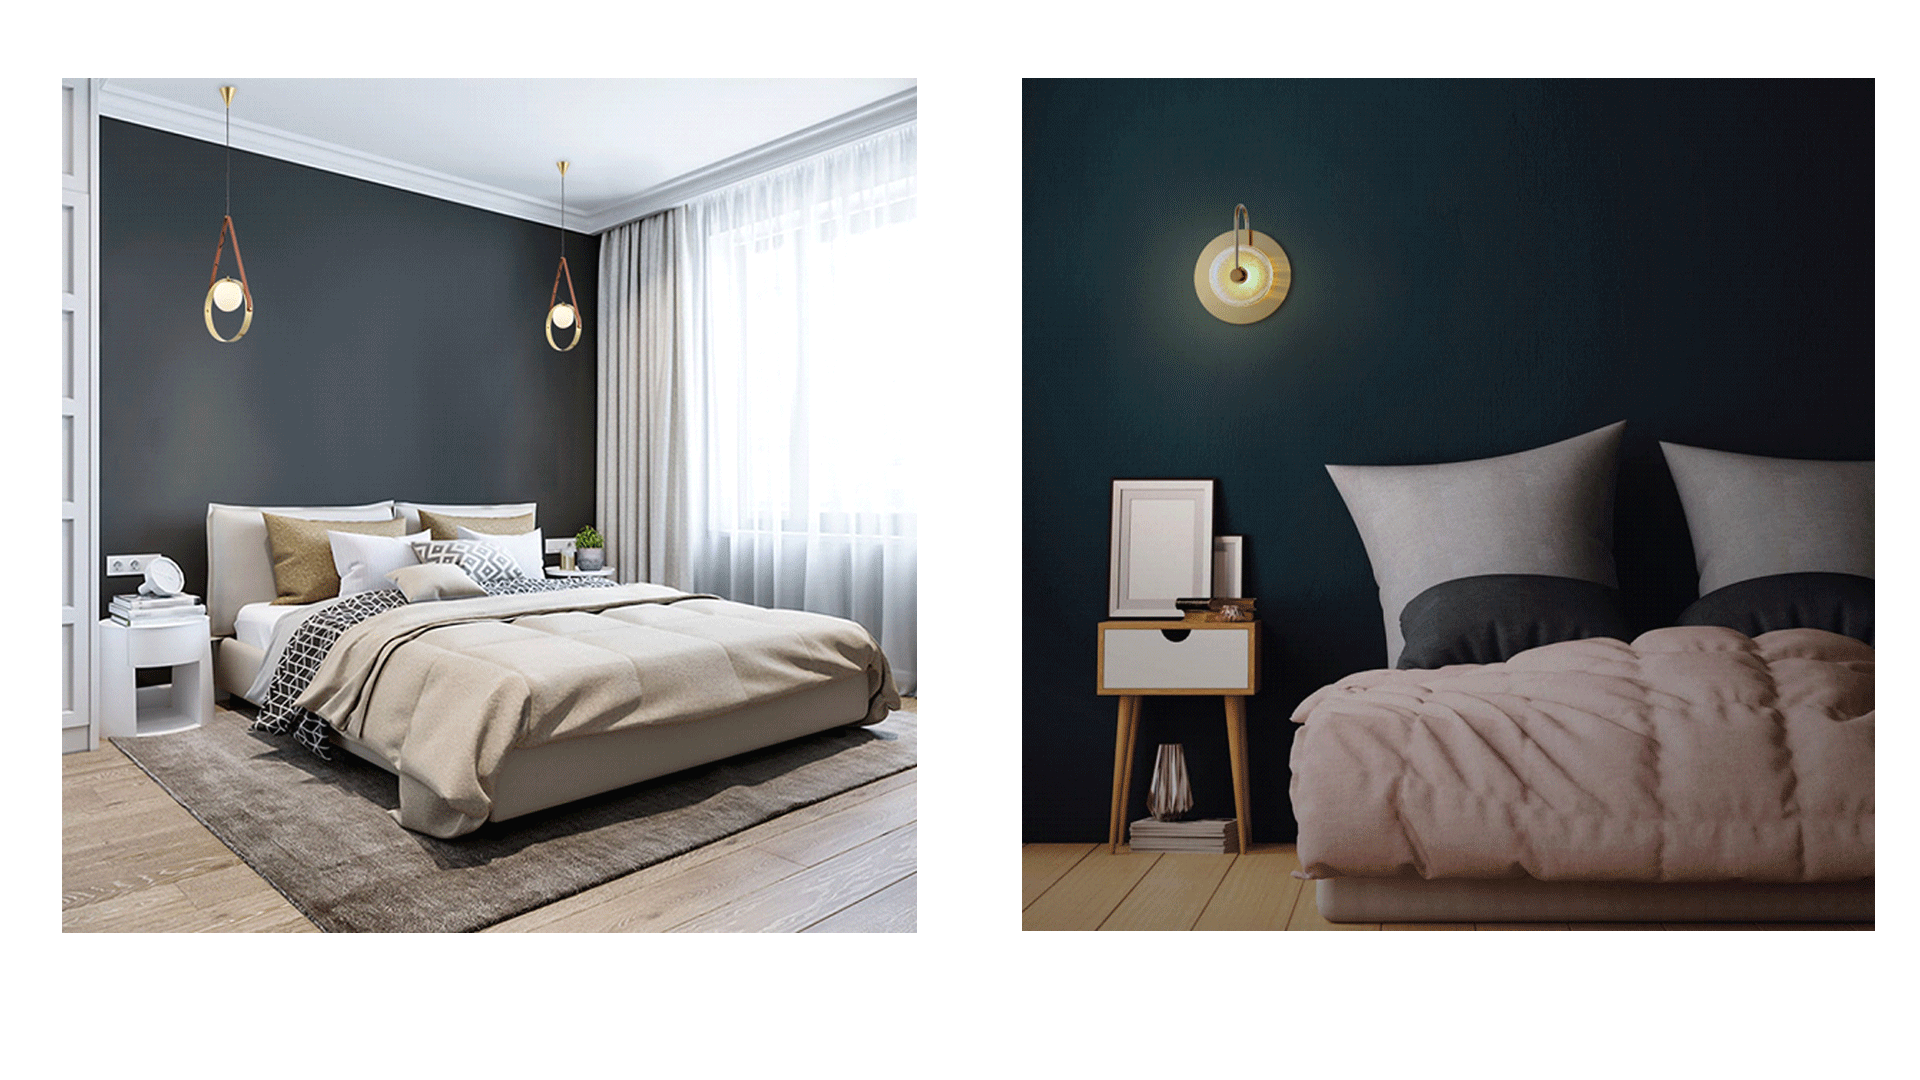 Bedroom Lights: Tips and Tricks - Insights ...